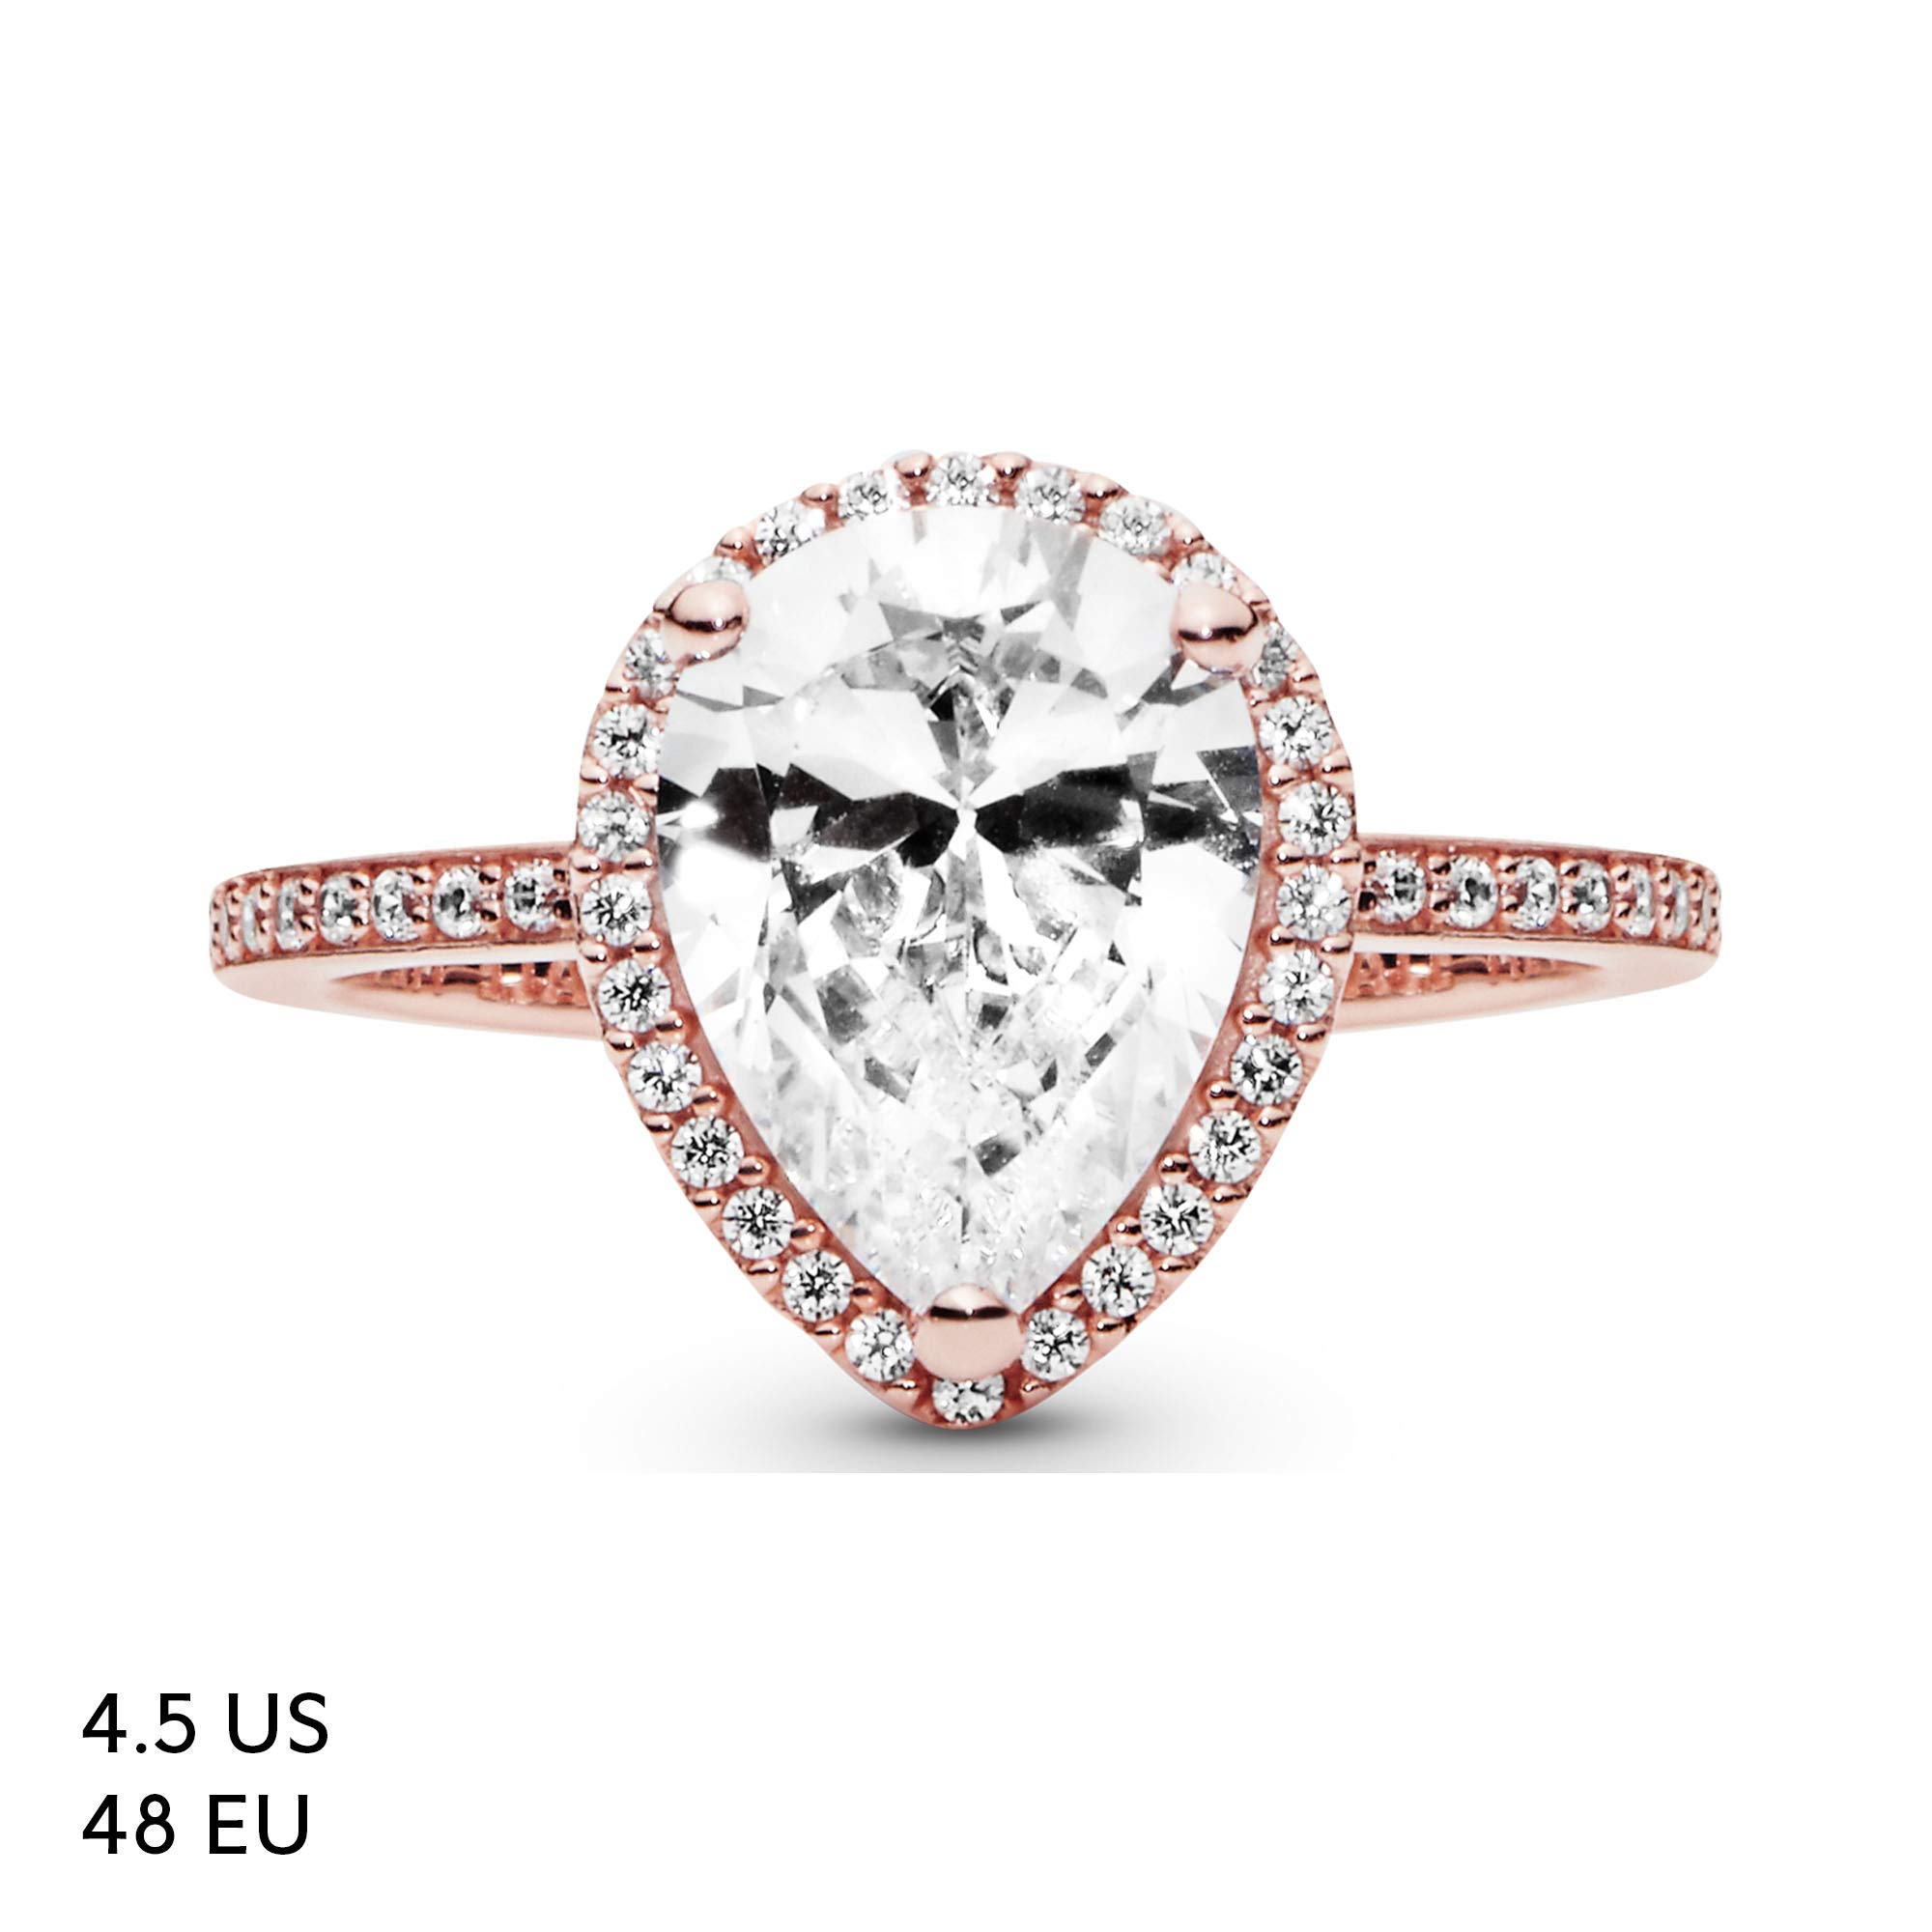 PANDORA Jewelry Sparkling Teardrop Halo Cubic Zirconia Ring in Rose